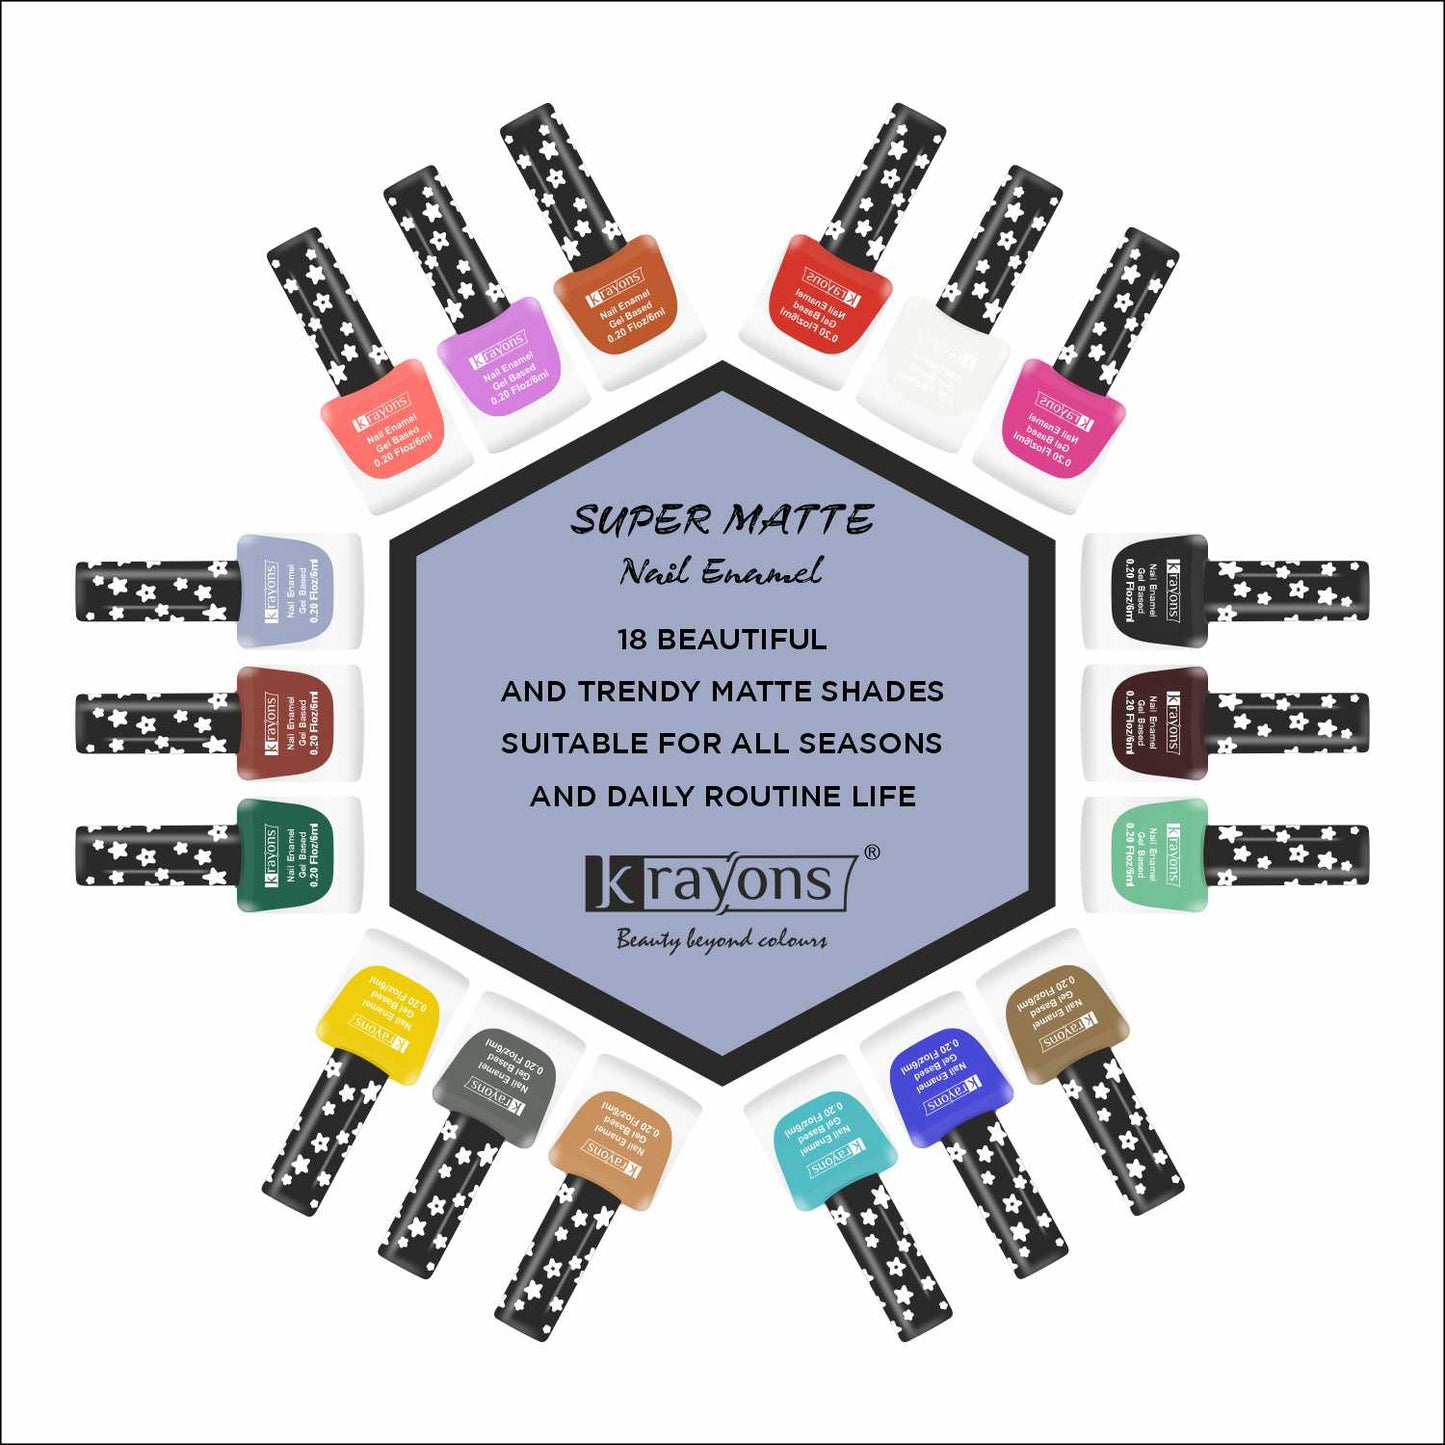 Krayons Cute Super Matte Finish Nail Enamel, Quick Dry, LongLasting, Blossom Peach, Plum Matte, Charcoal Grey, 6ml Each (Pack of 3)